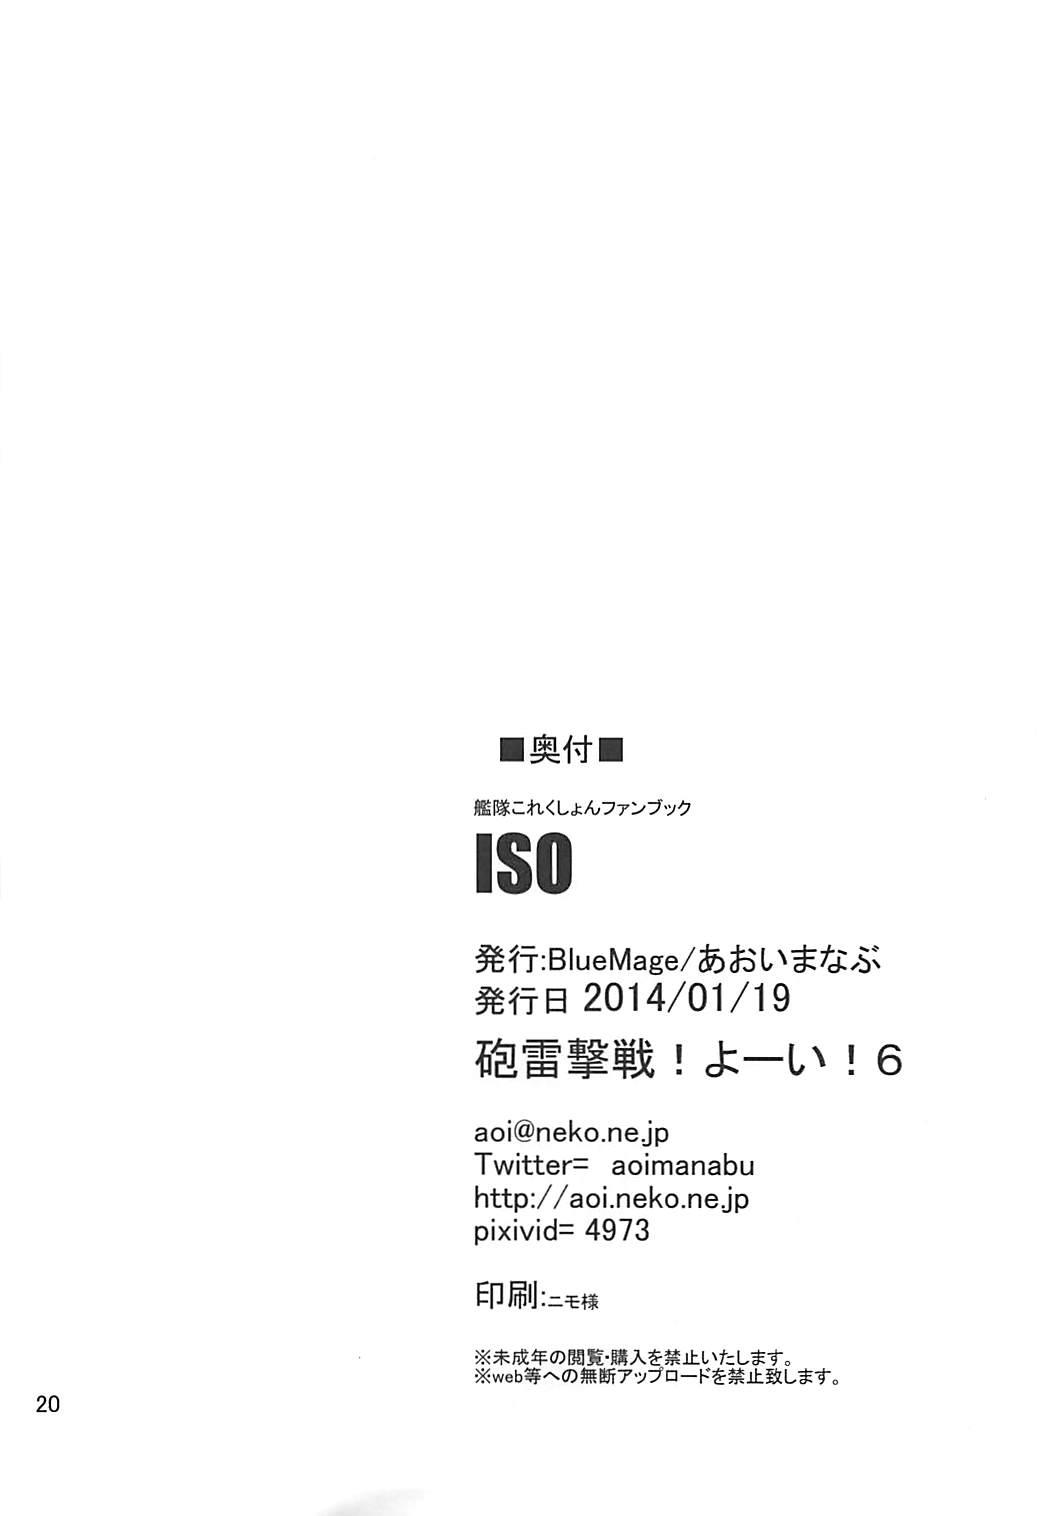 ISO - Ironbottom Sound Oppai 21